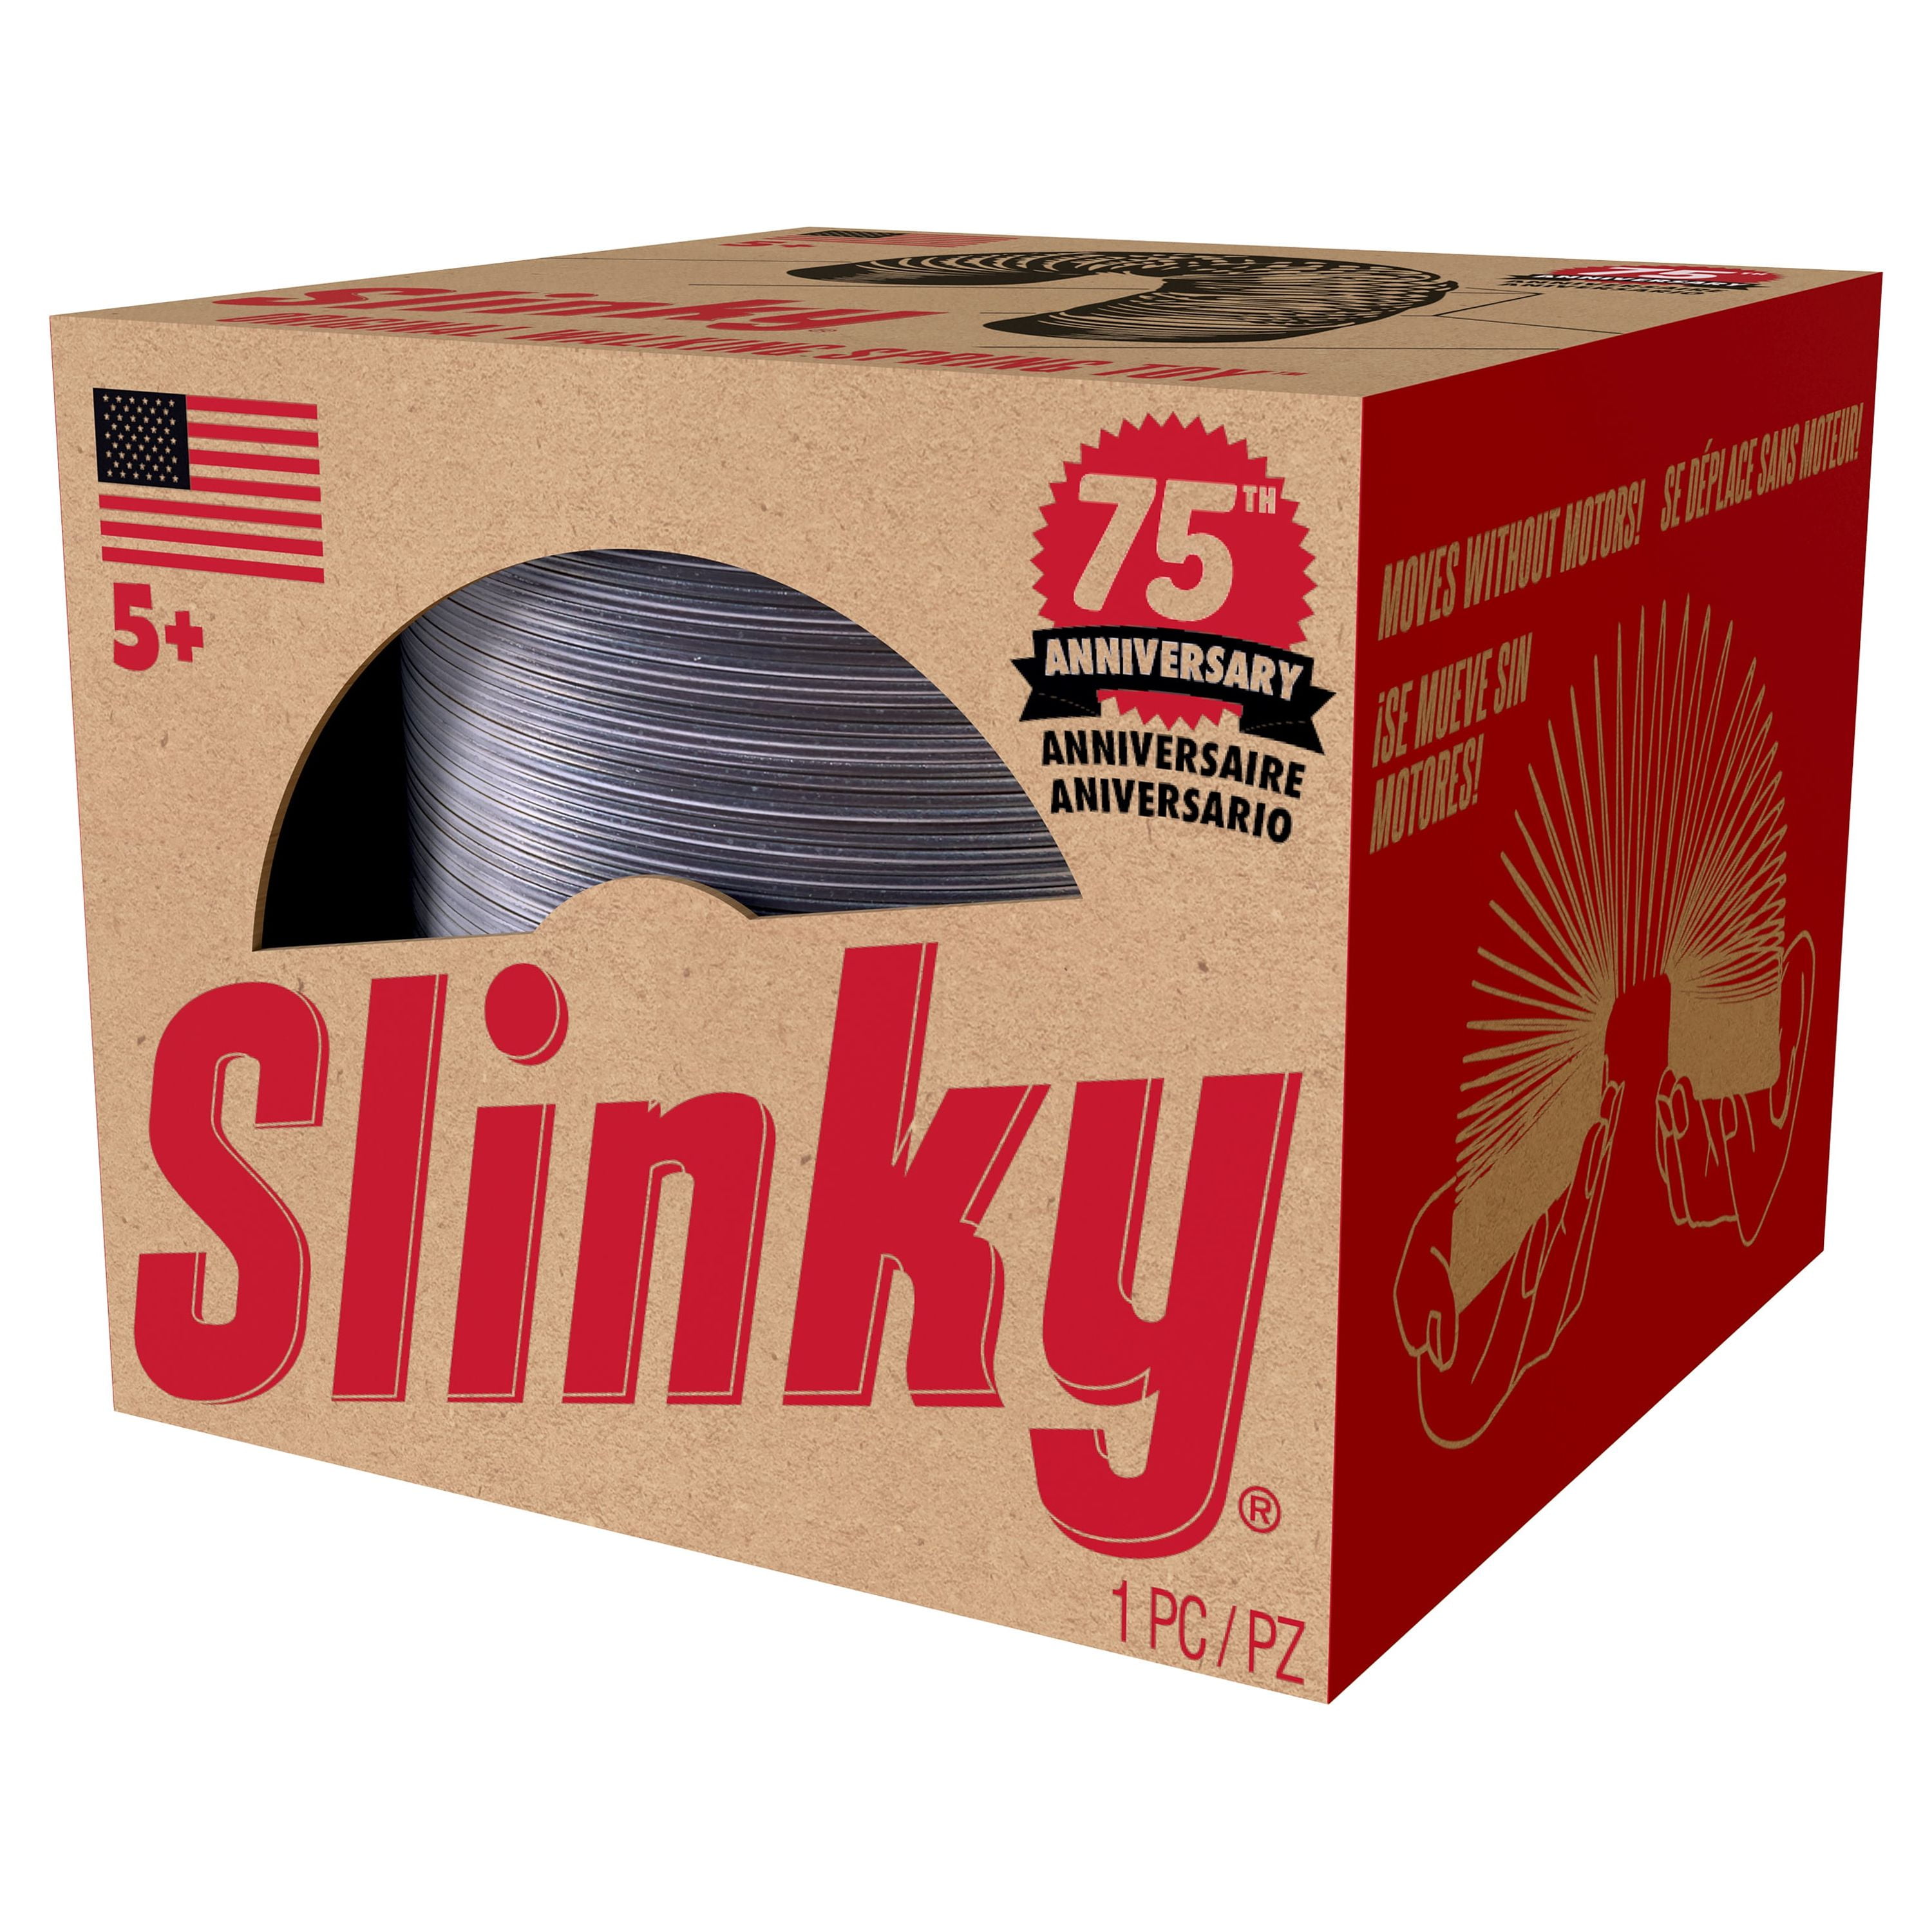 The Original Slinky Brand Metal Slinky in Blue Retro Box 